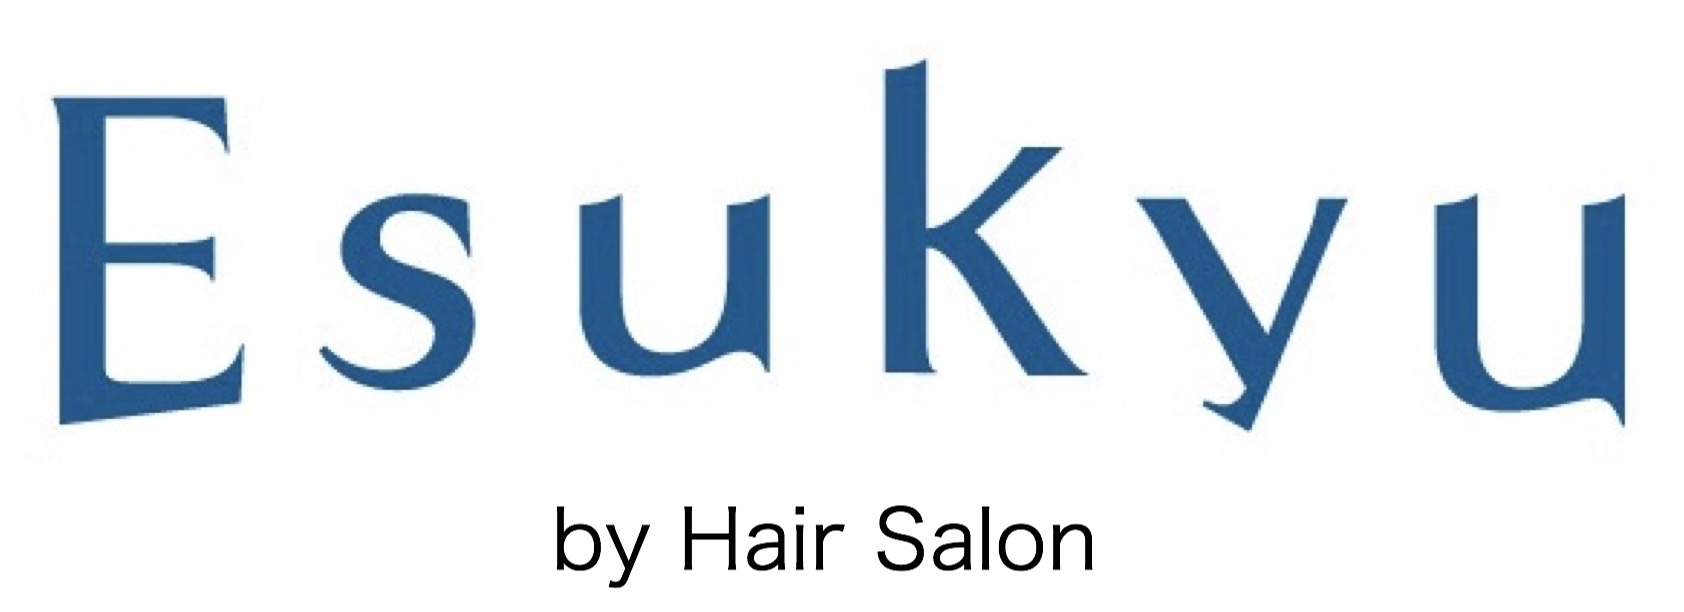 Esukyu 恵比寿パーソナル美容師ブランド Produce By Yusuke Tomura 本質を求める大人の美容室